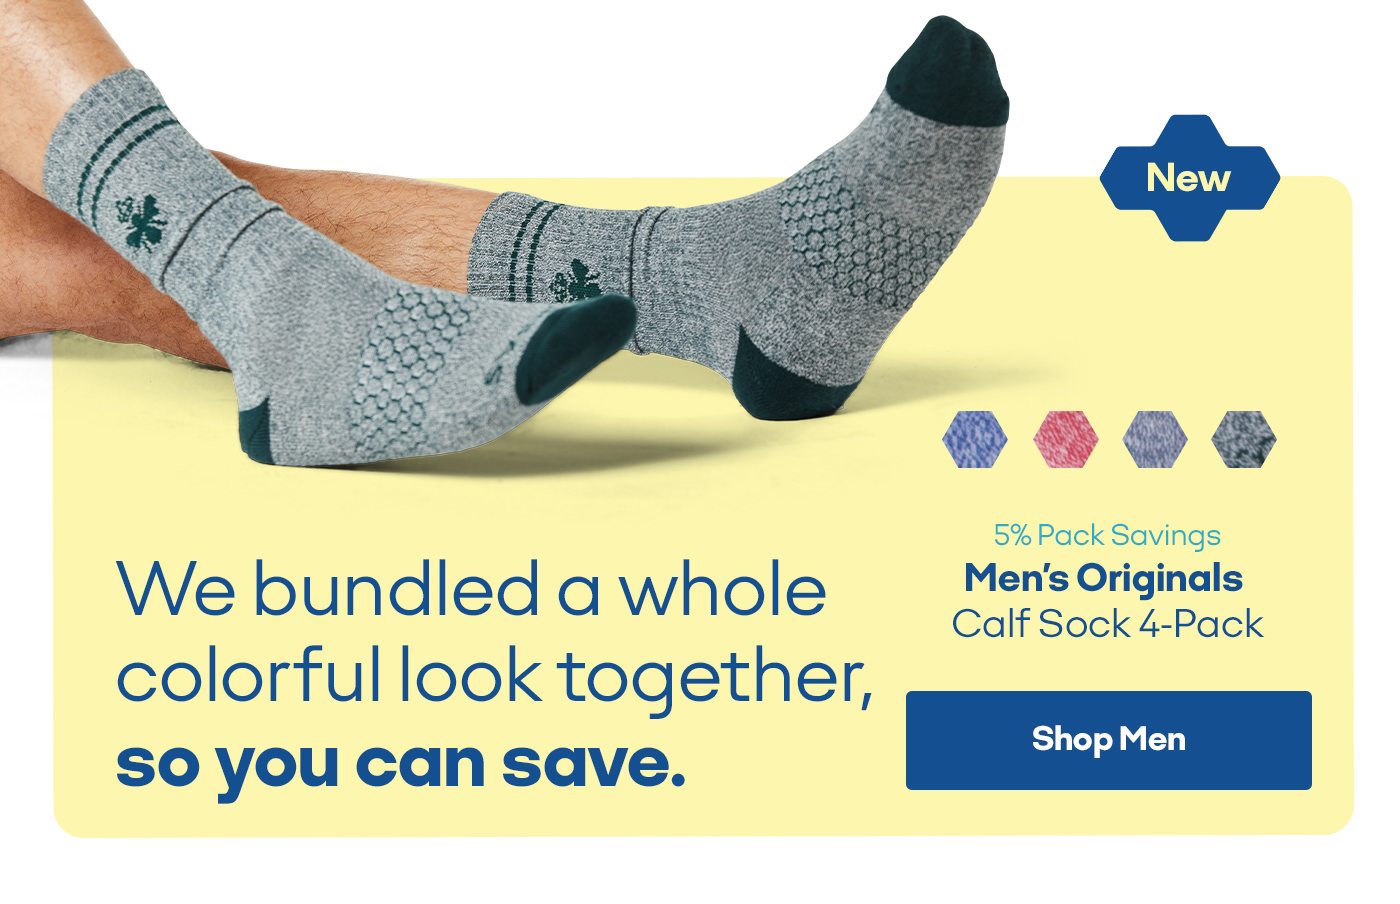 We bundled a whole colorful look together, so you can save. Men's Originals Calf Sock 4 Pack. Shop Men.